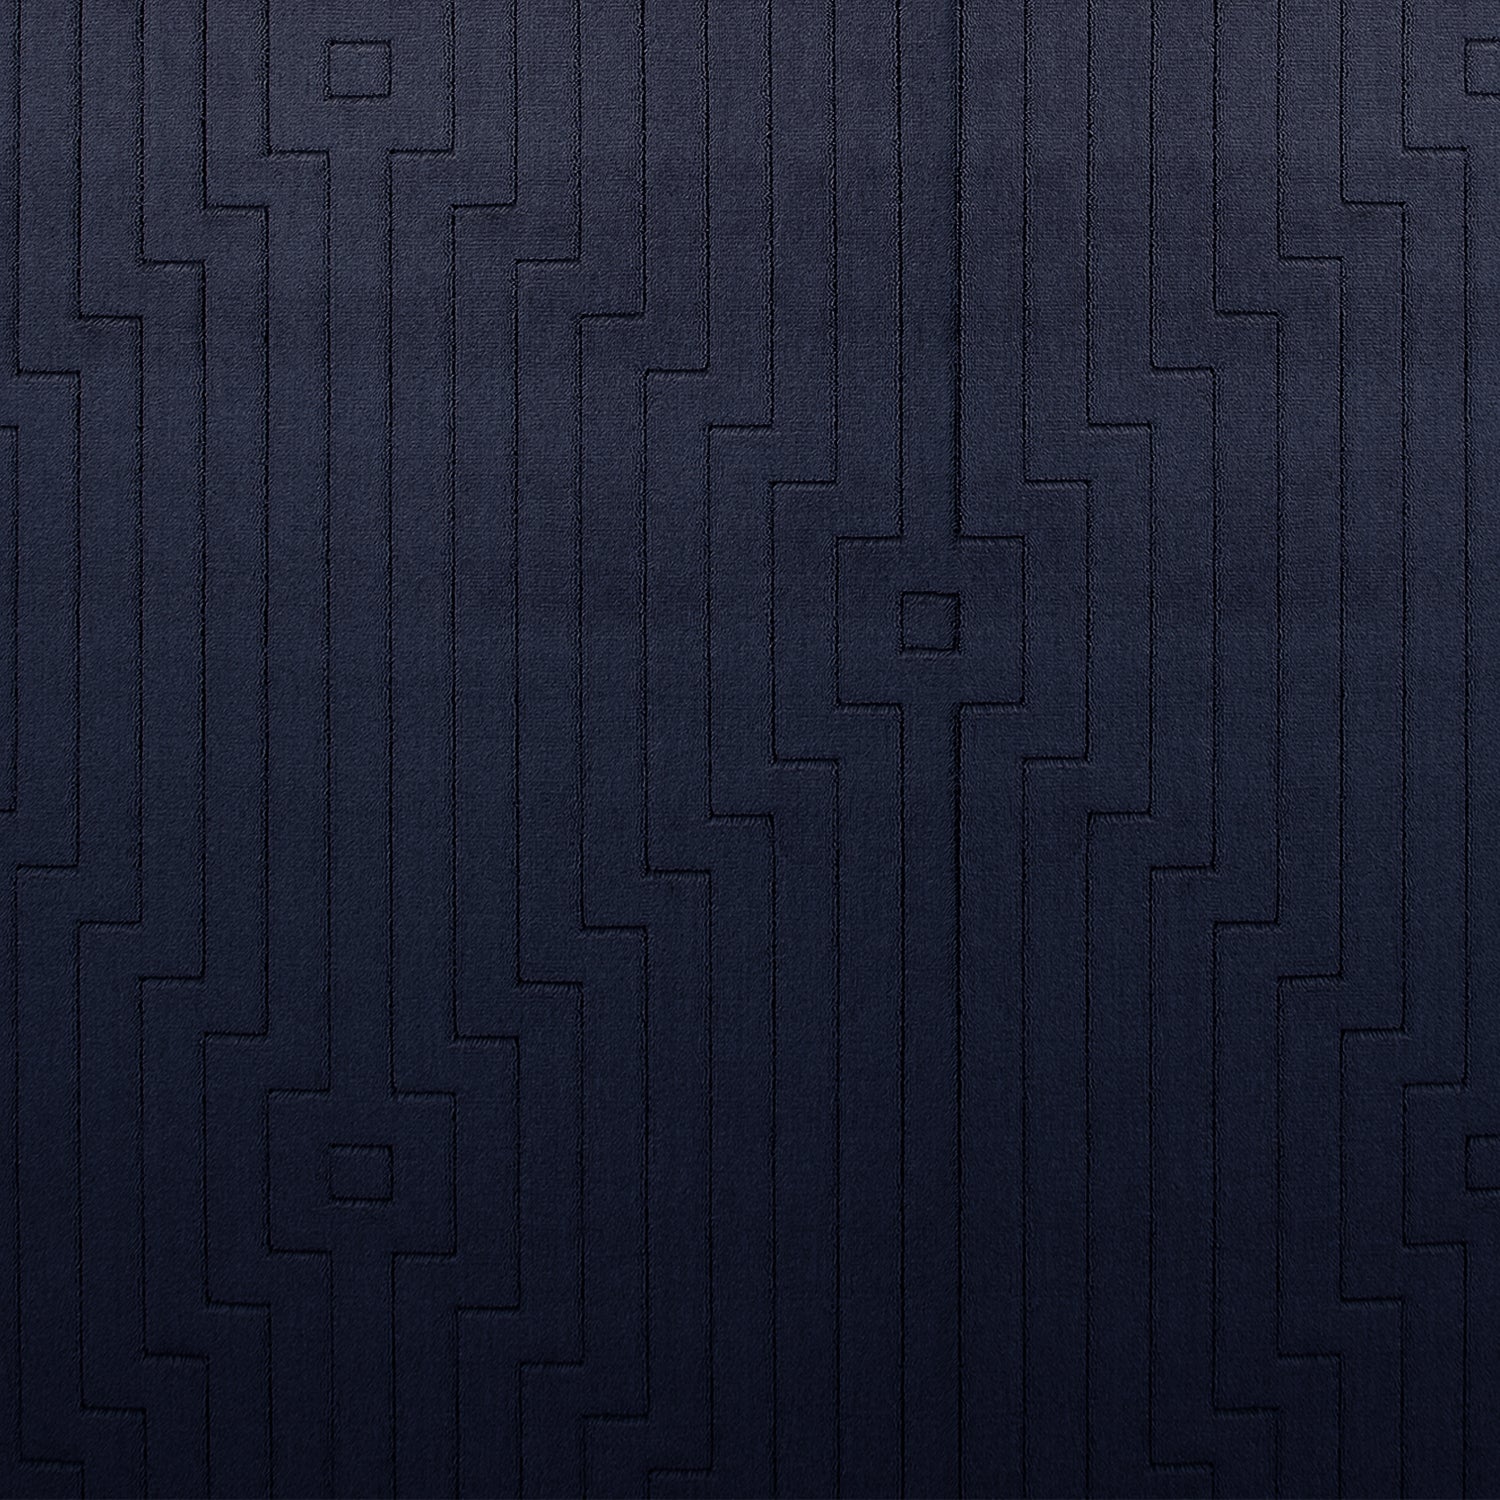 Wool-silk broadloom carpet swatch in a dimensional geometric weave in navy.